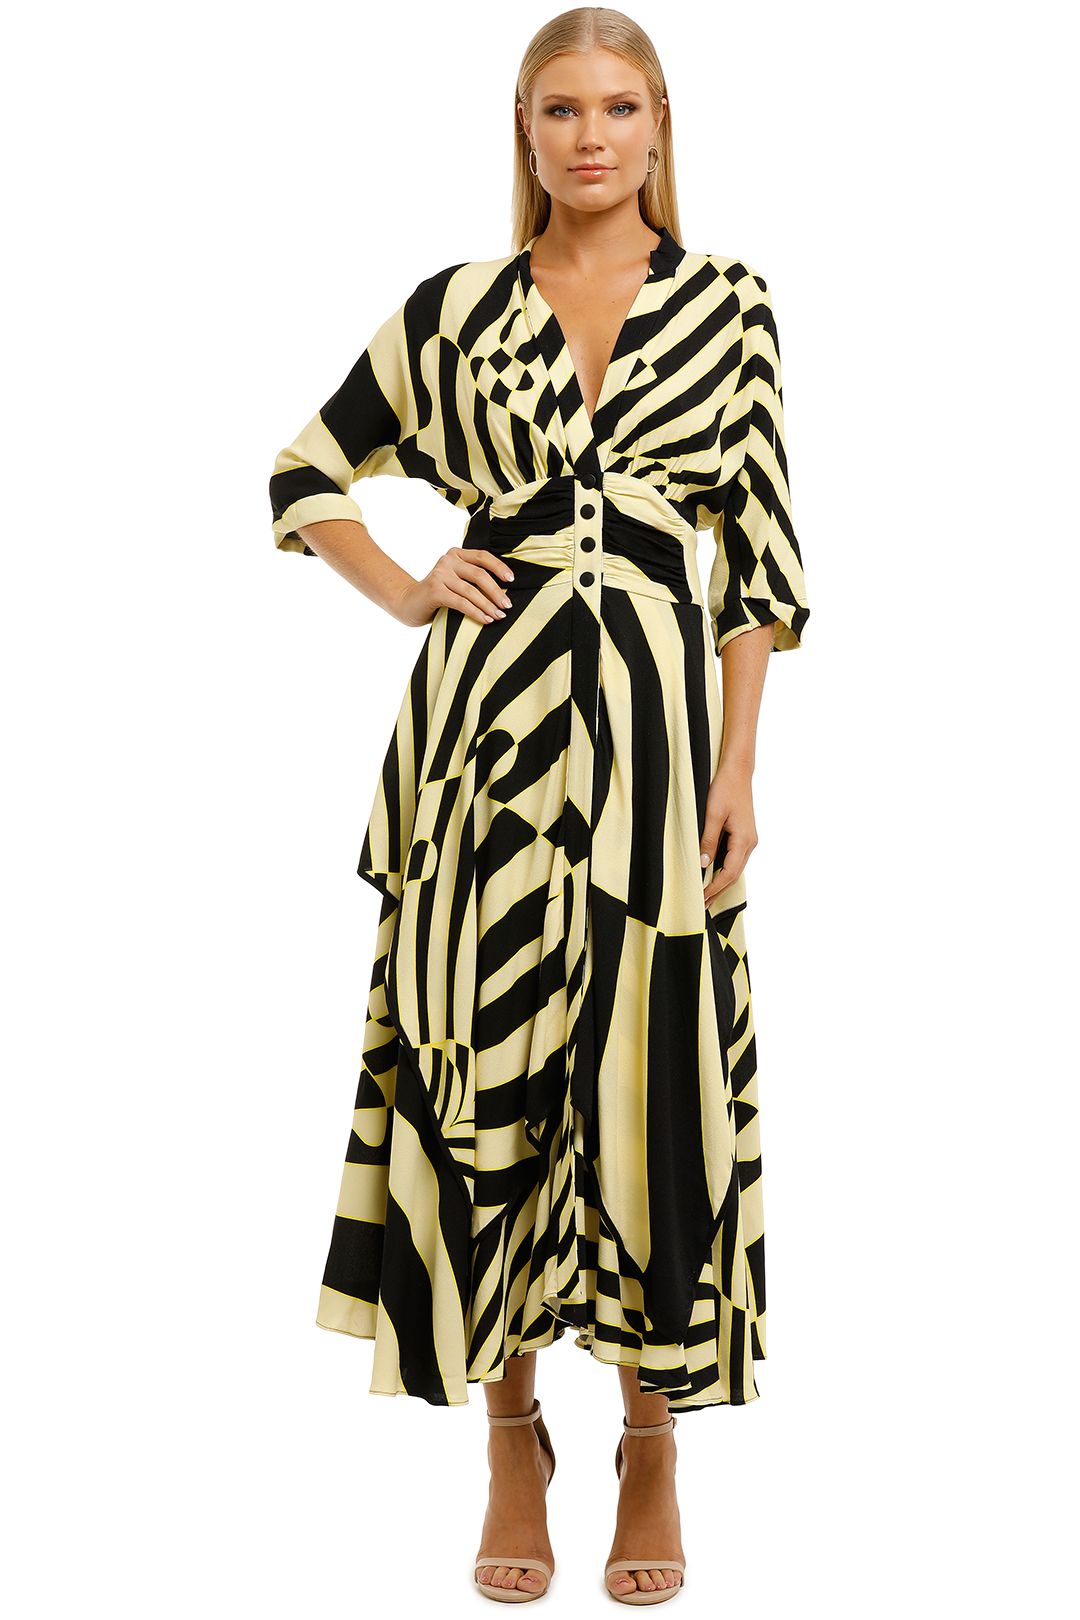 KITX-Stripes-Handkerchief-Shirt Dress-Zebra Print-Front